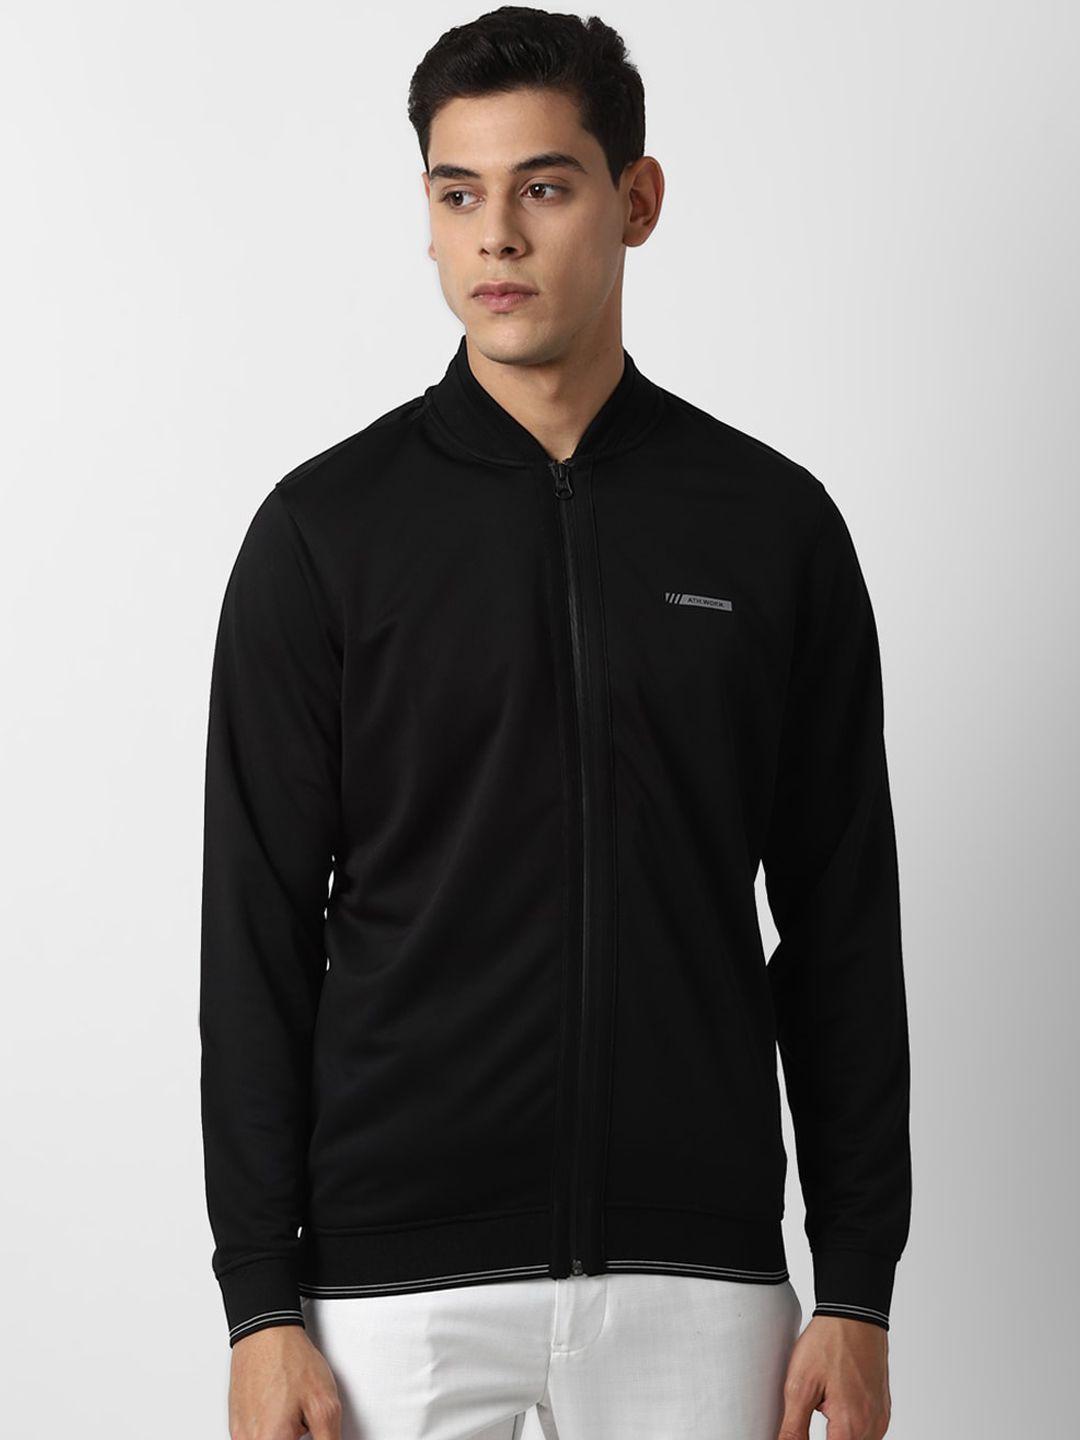 louis-philippe-sport-men-black-sweatshirt